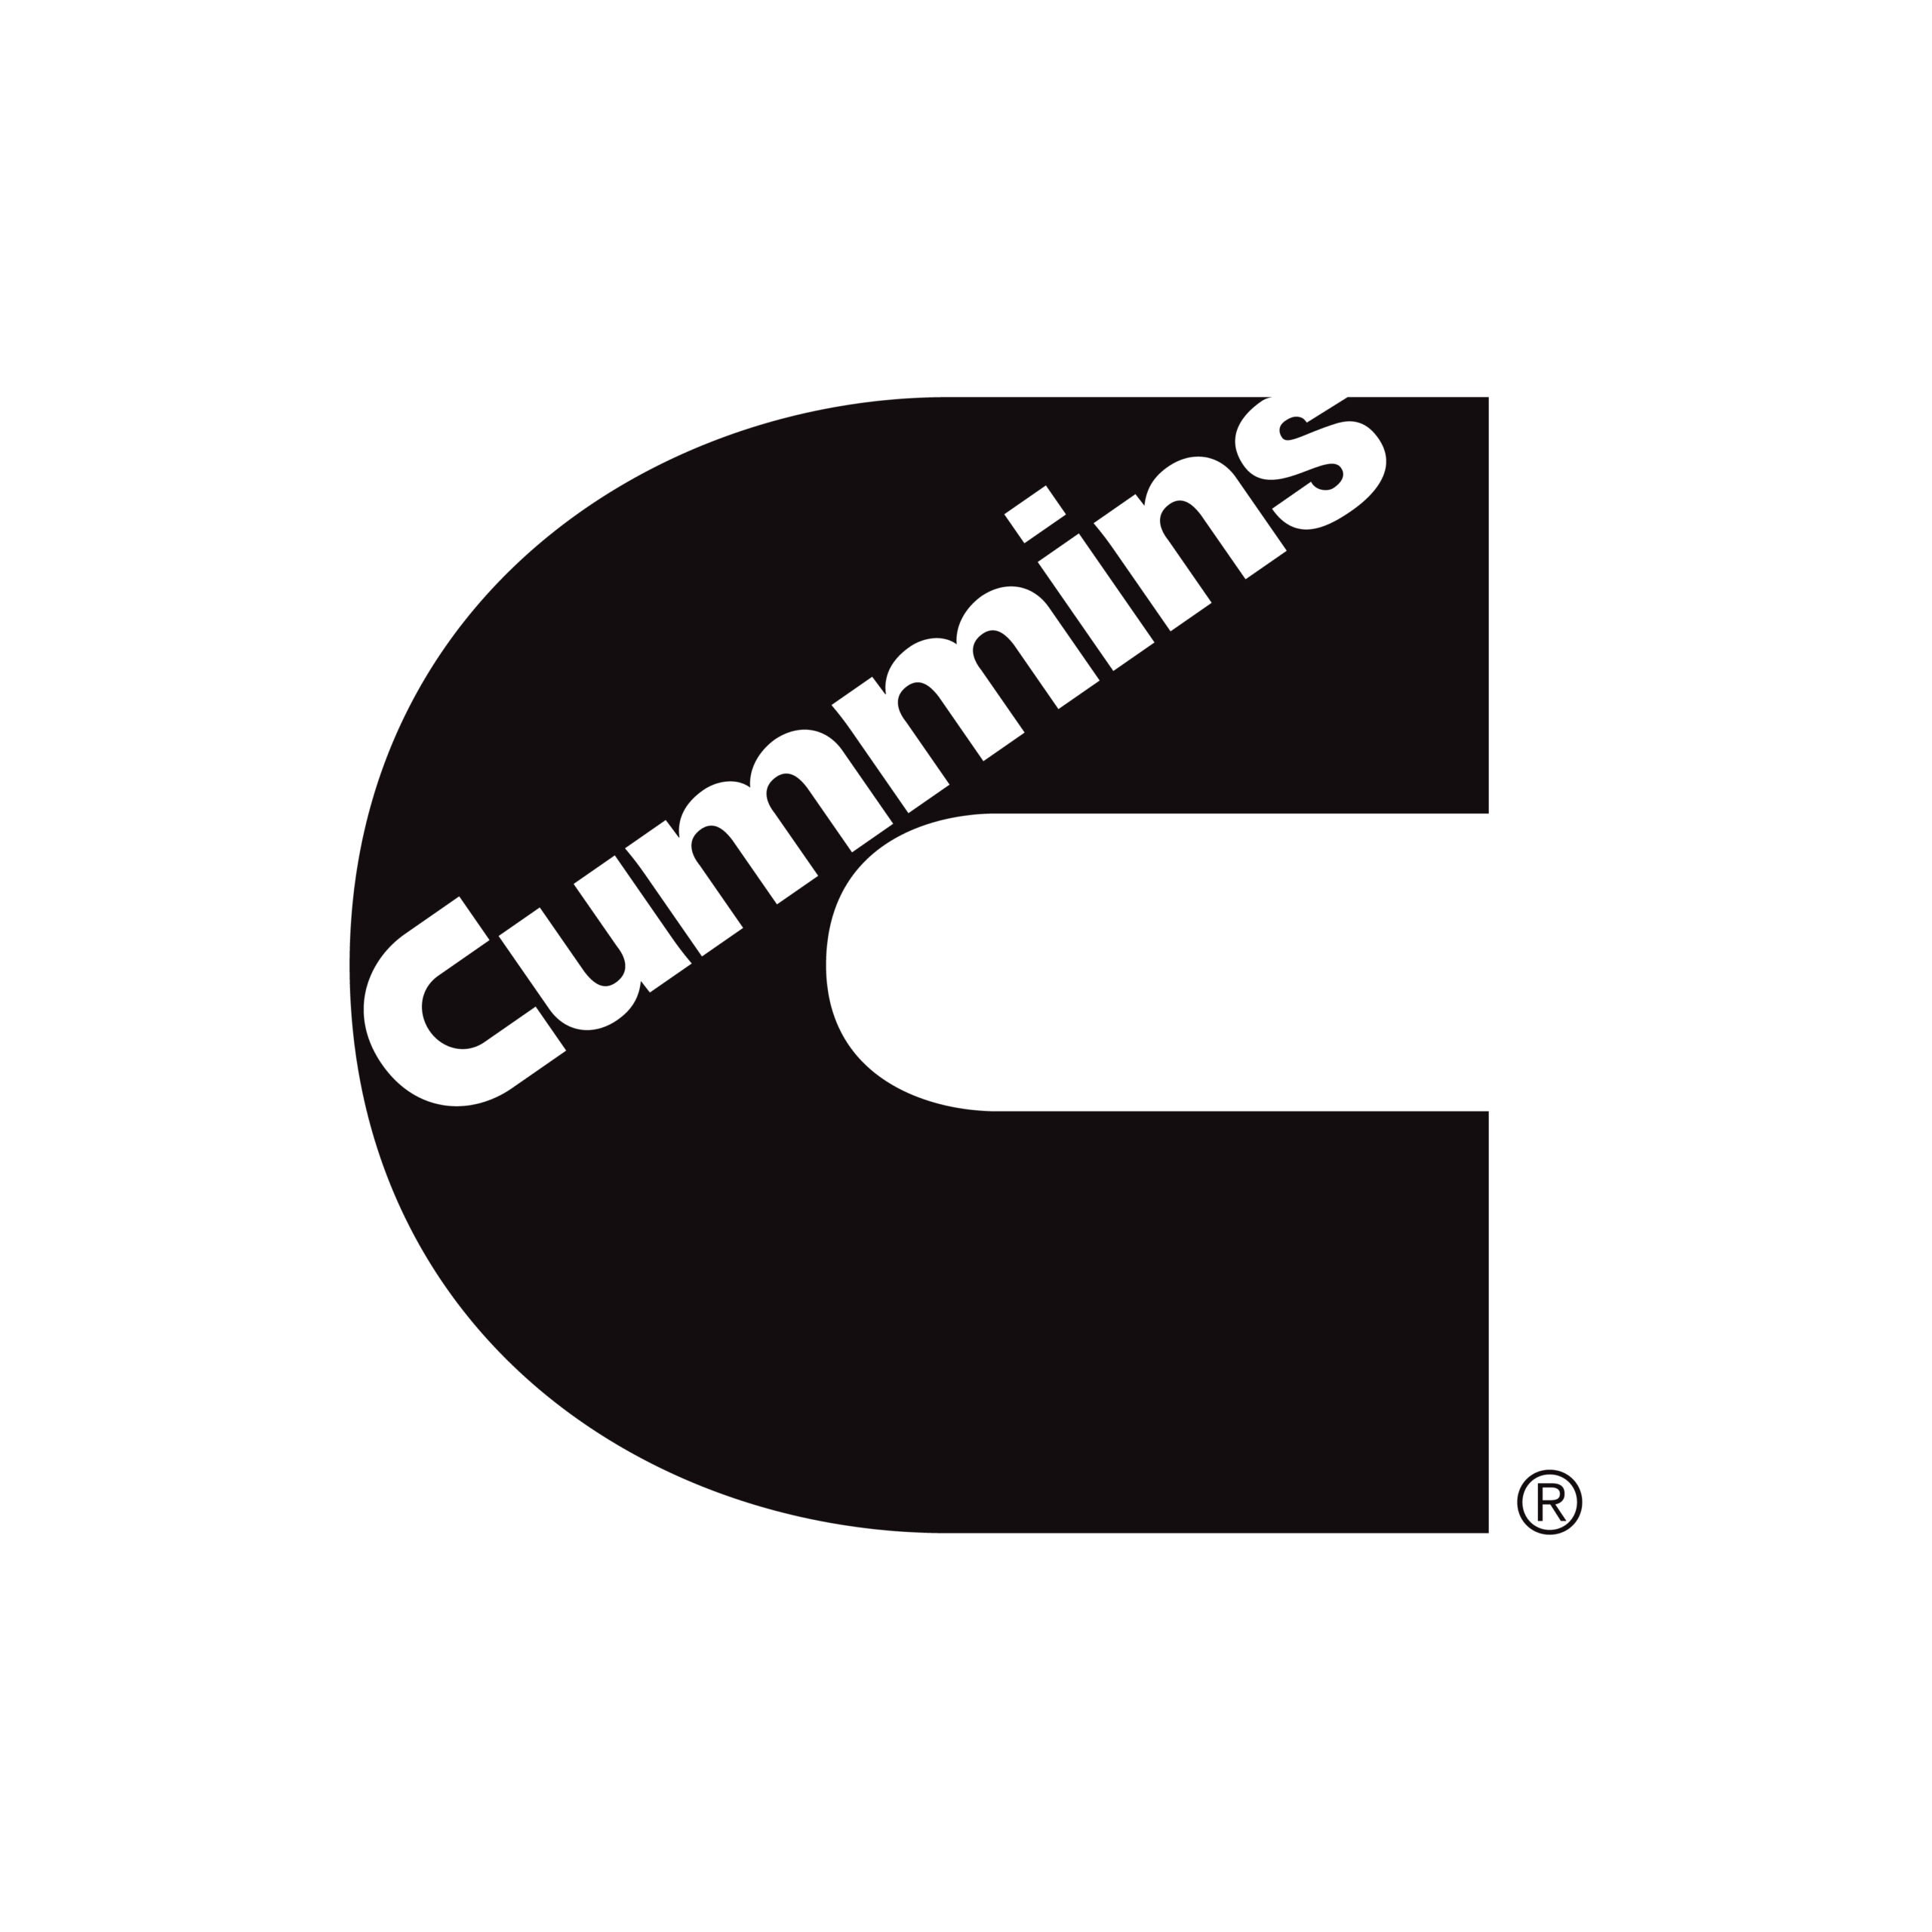 Cummins vector logo humane society in flint michigan